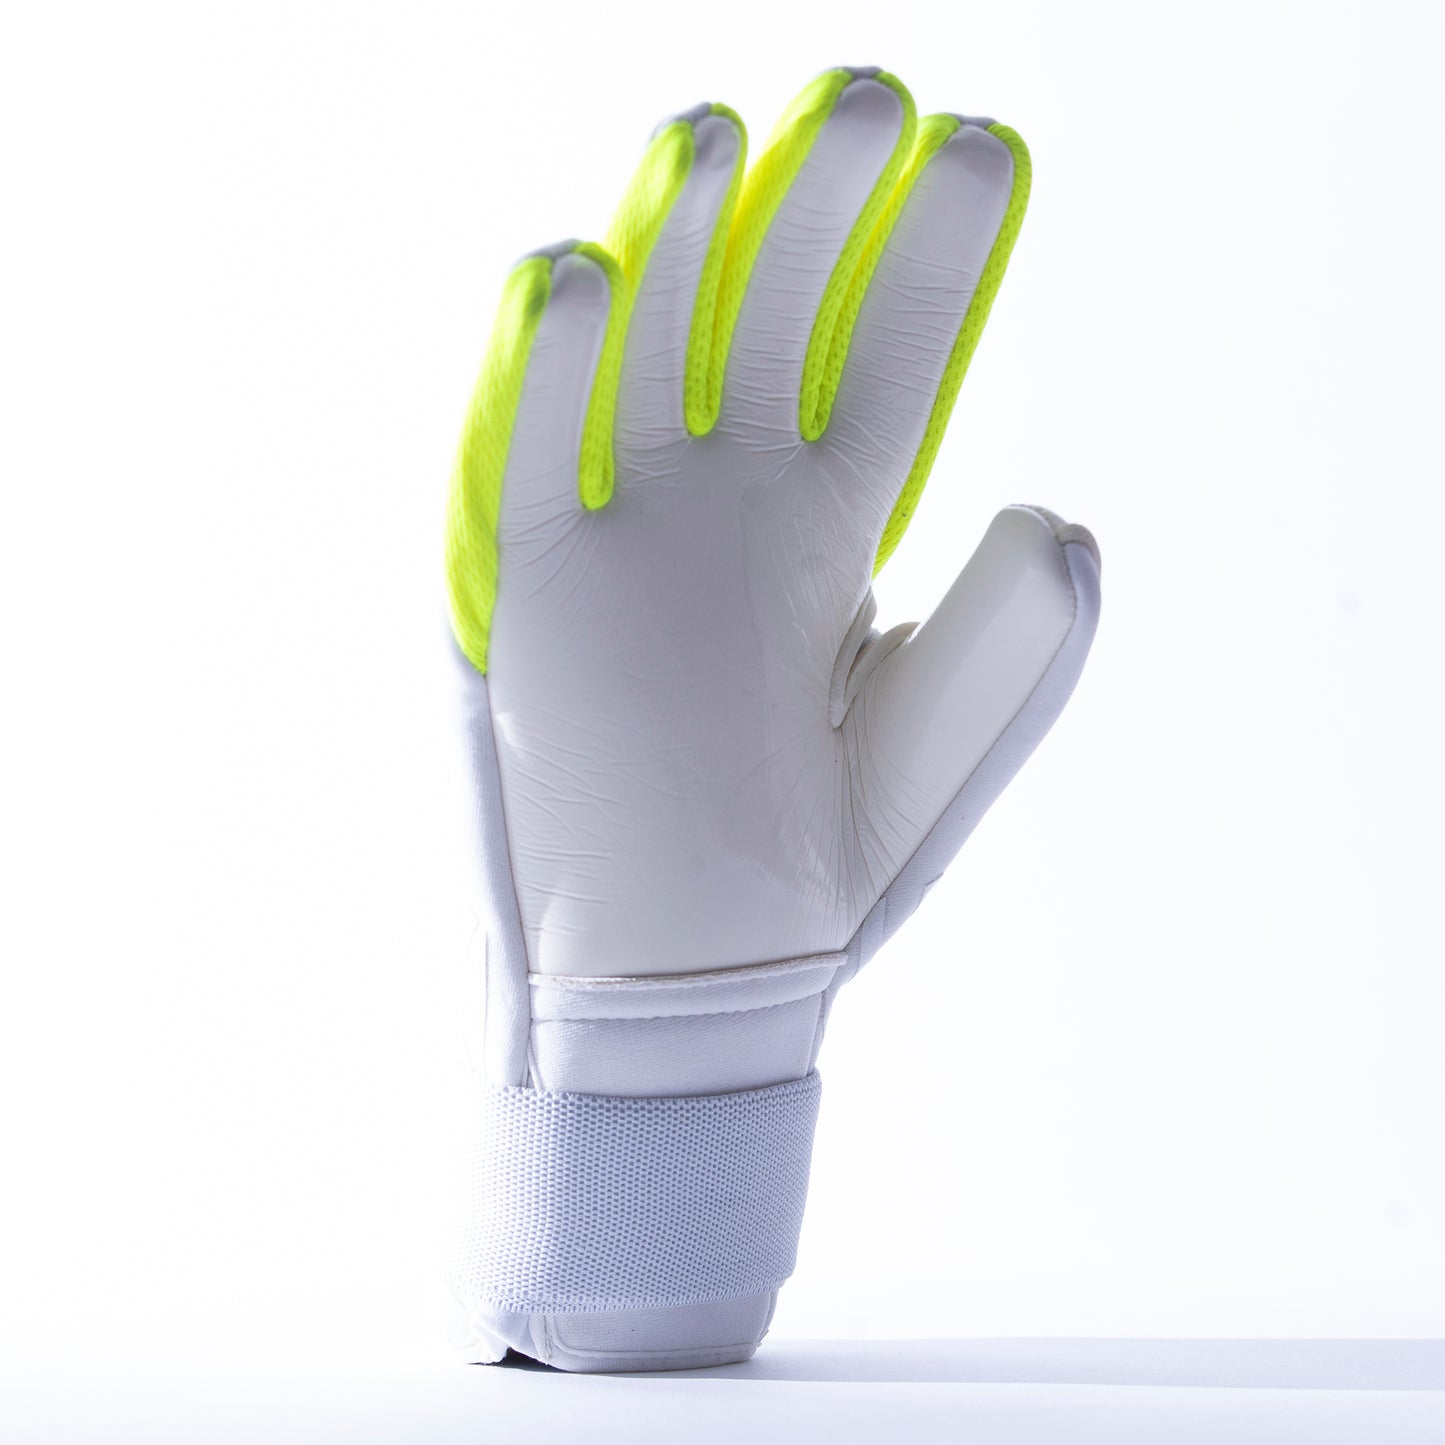 White and neon yellow goalkeeper glove